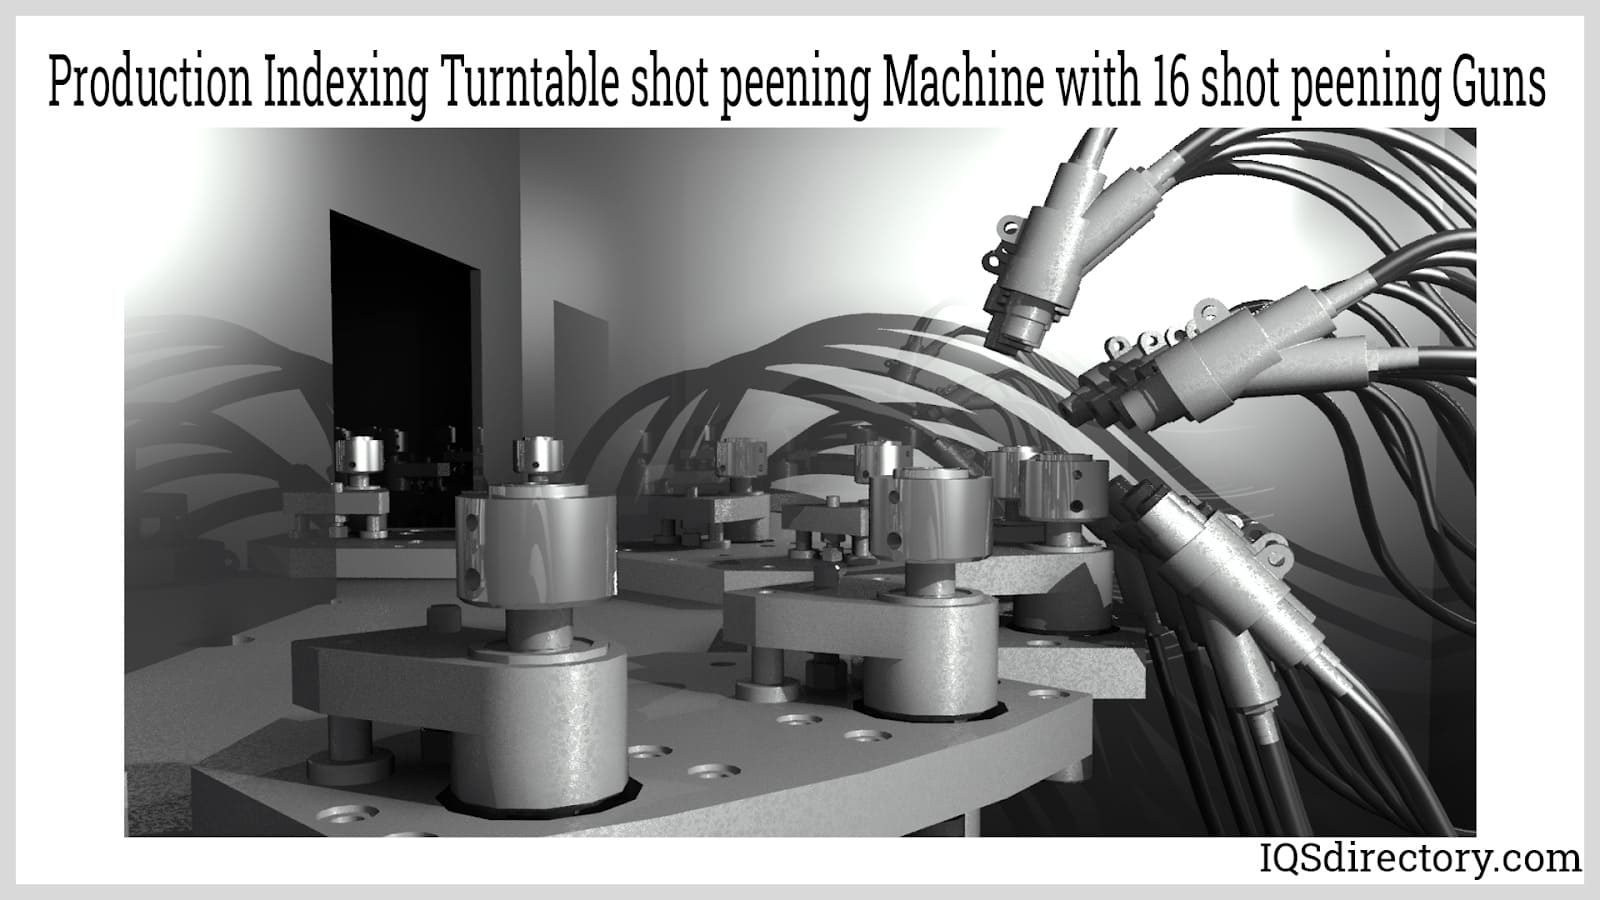 Production Indexing Turntable shot peening Machine with 16 shot peening Guns